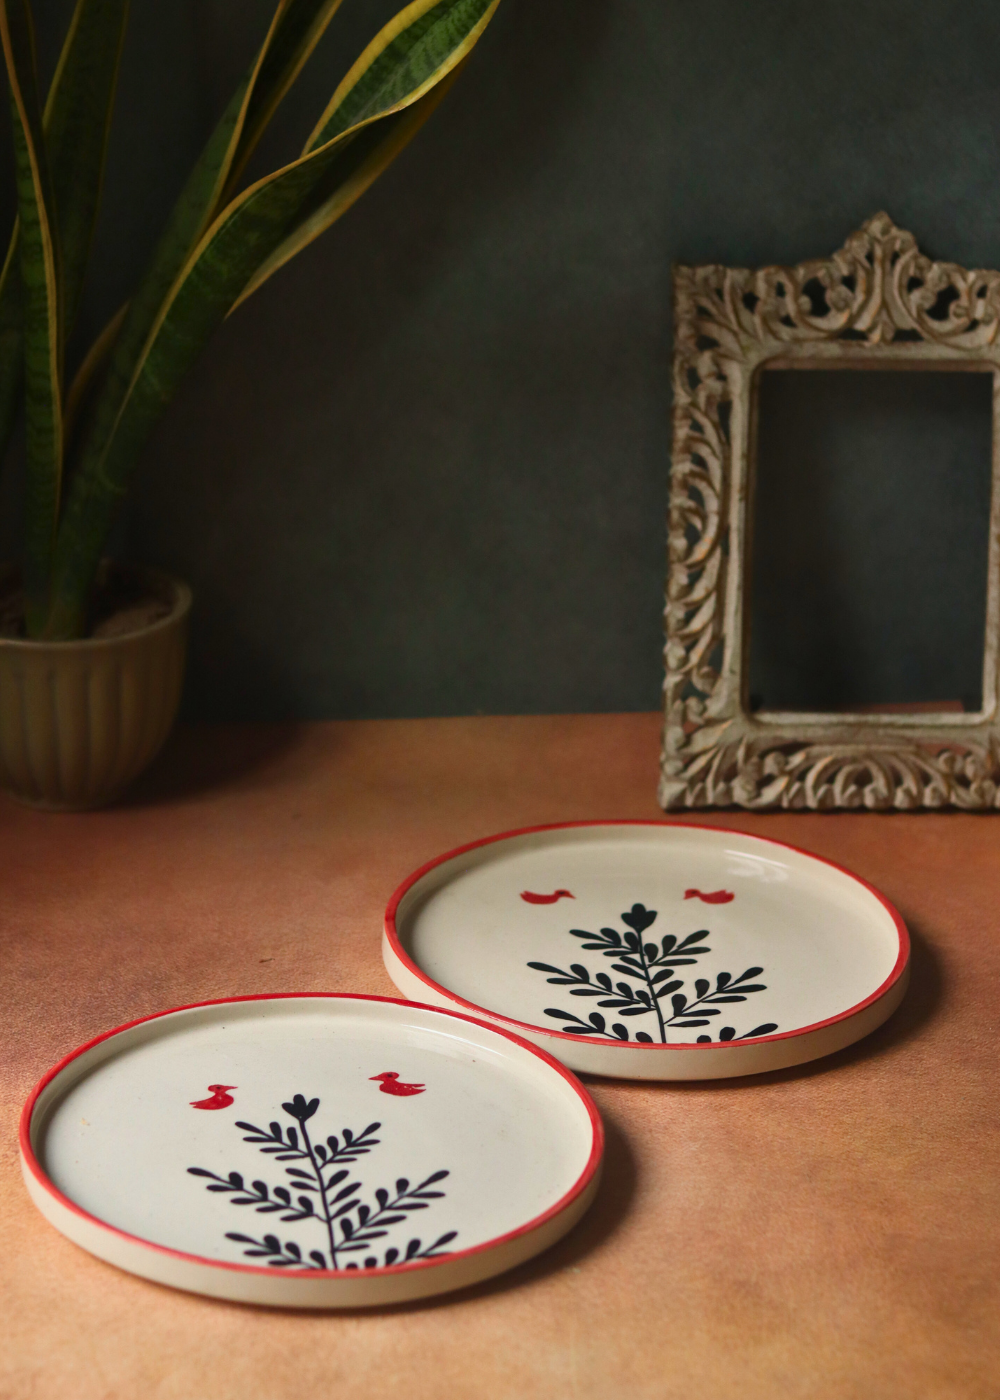 Two handmade ceramic platters